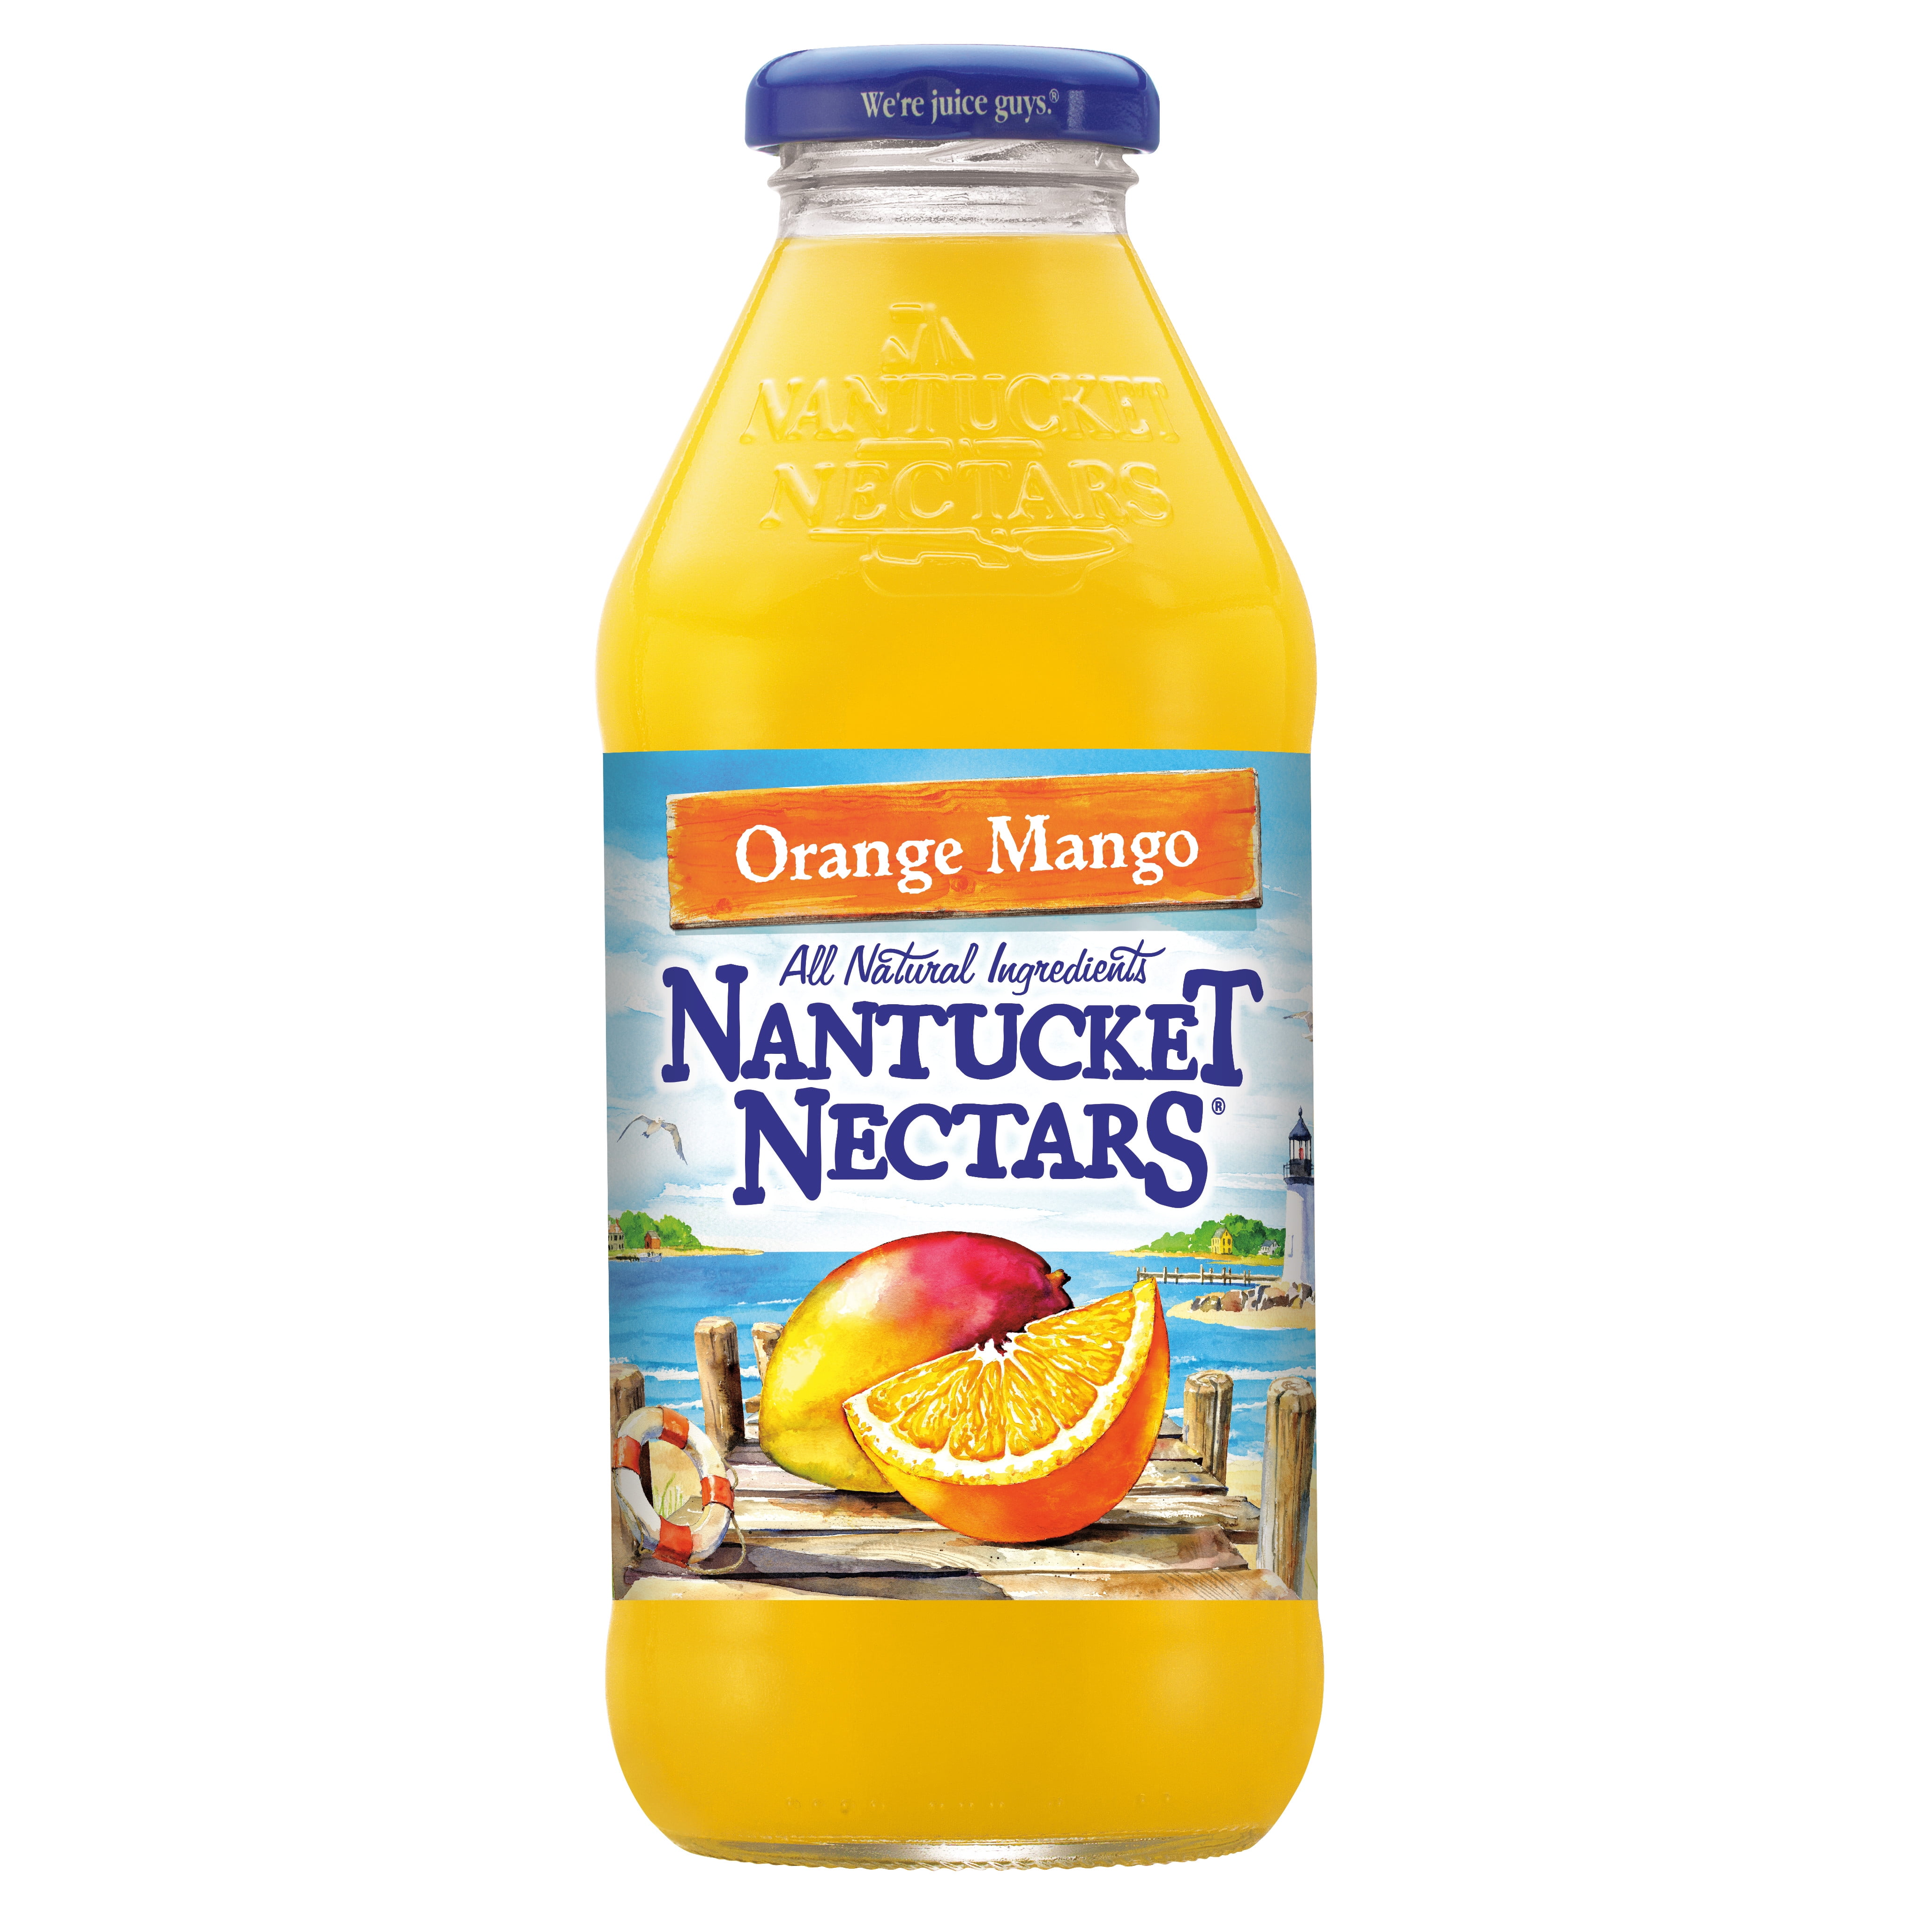 Nantucket Nectars Orange Mango Juice Drink, 16 Fl. Oz. - Walmart.com